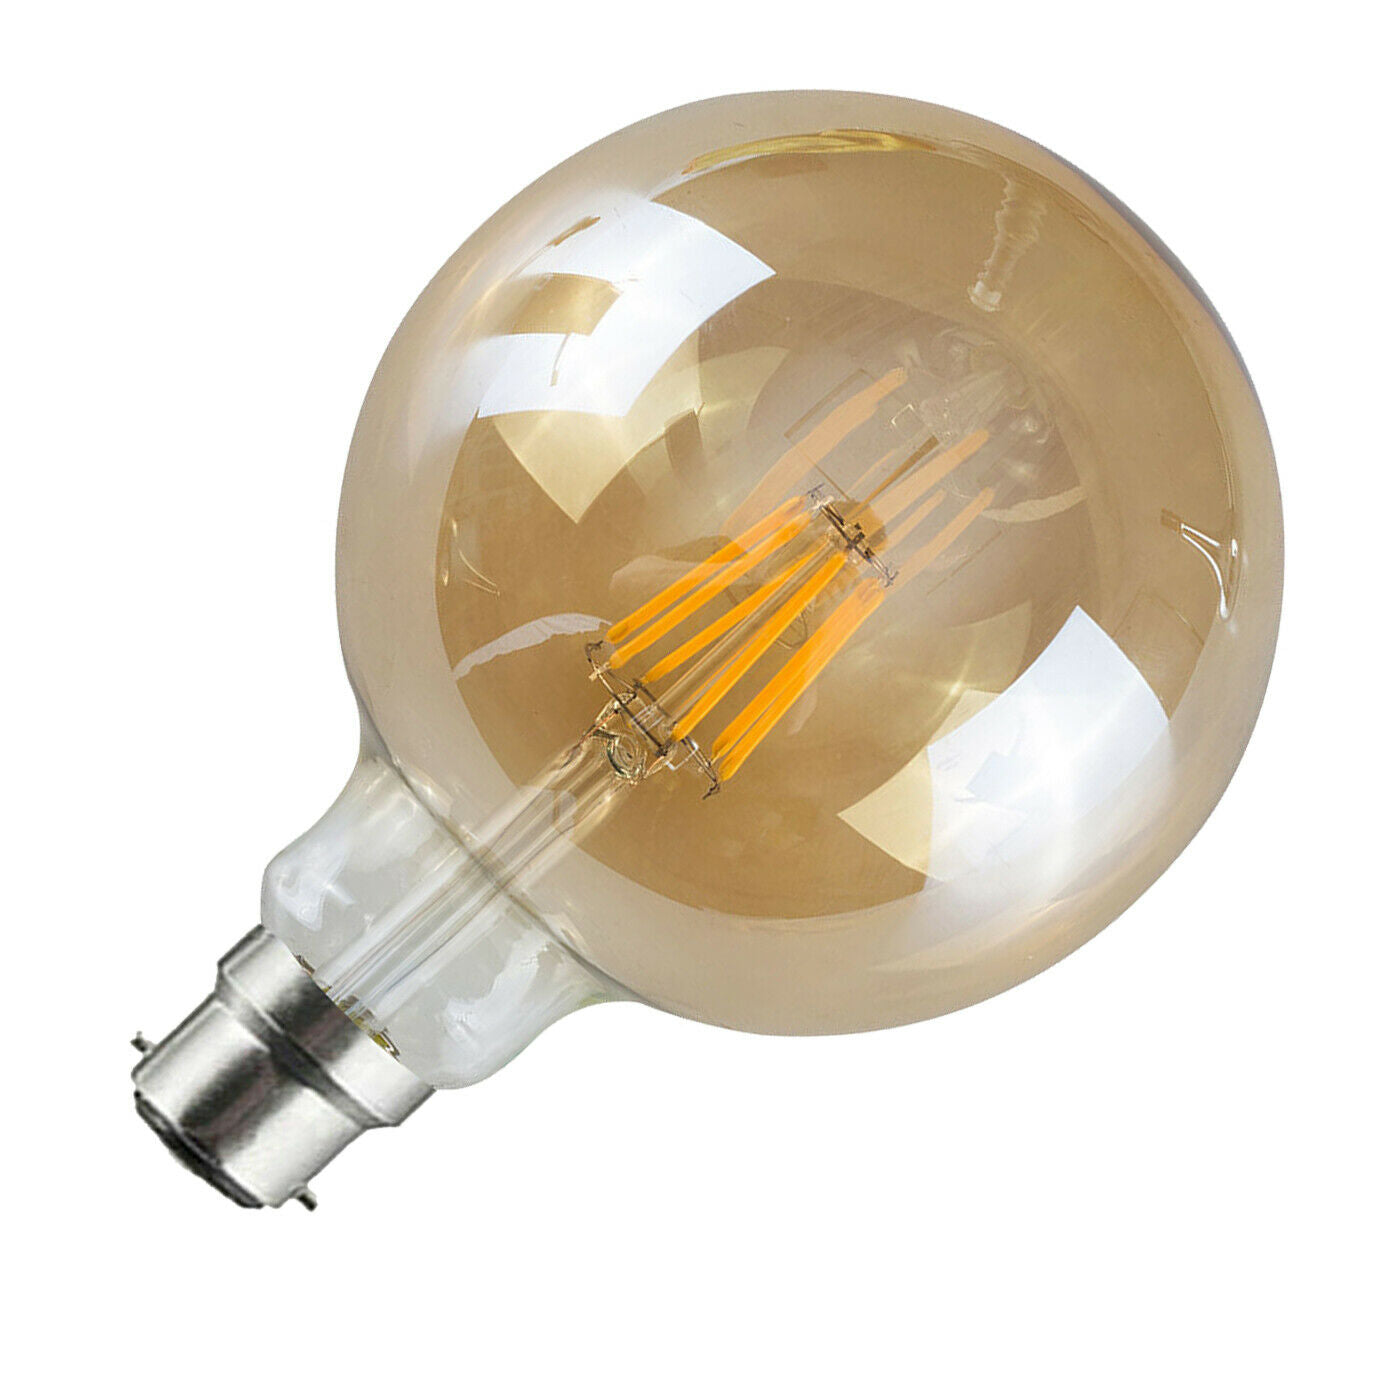 G125 B22 8W Dimmable LED Light Vintage Globe Retro Bulb